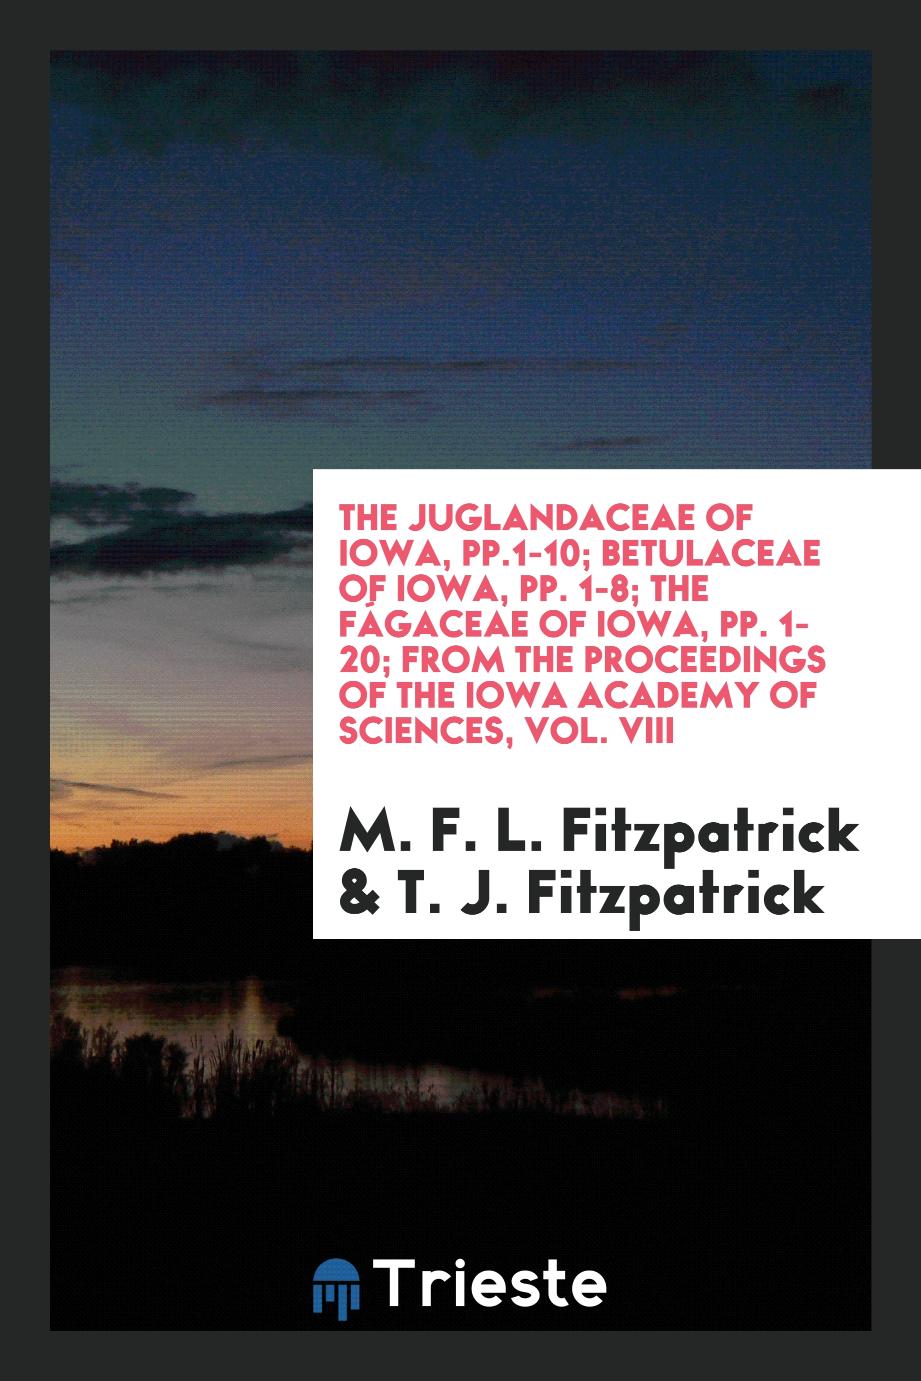 The juglandaceae of Iowa, pp.1-10; Betulaceae of Iowa, pp. 1-8; The fágaceae of Iowa, pp. 1-20; From the Proceedings of the Iowa Academy of Sciences, Vol. VIII